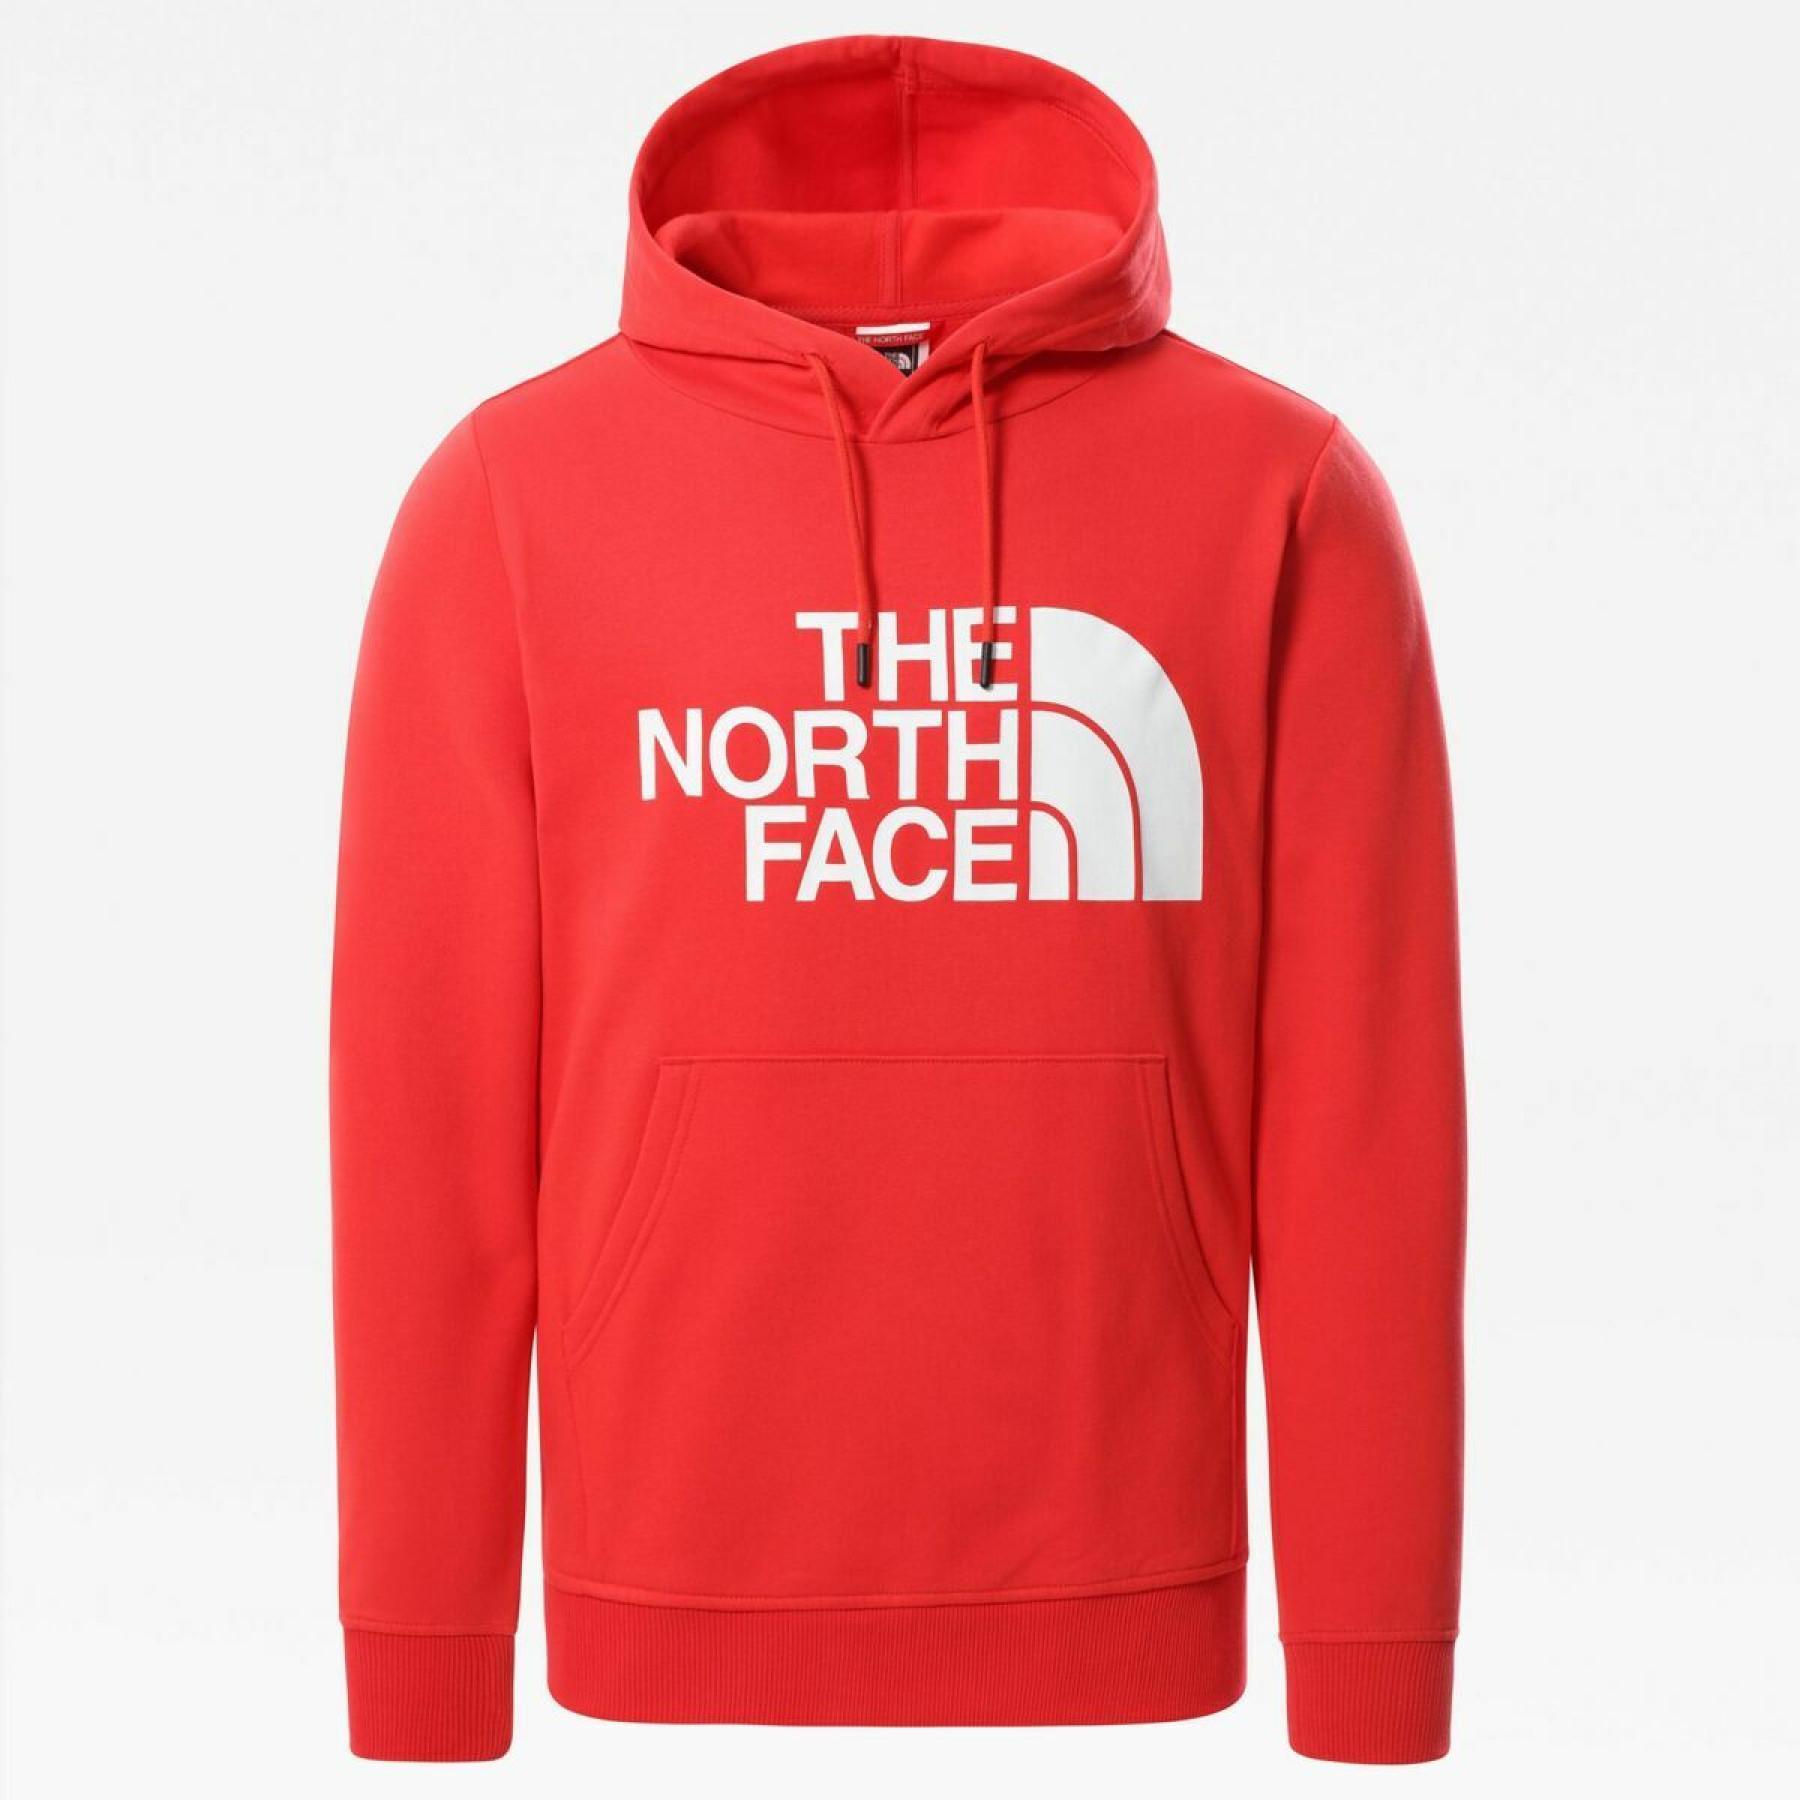 Sweatshirt à capuche The North Face Standard